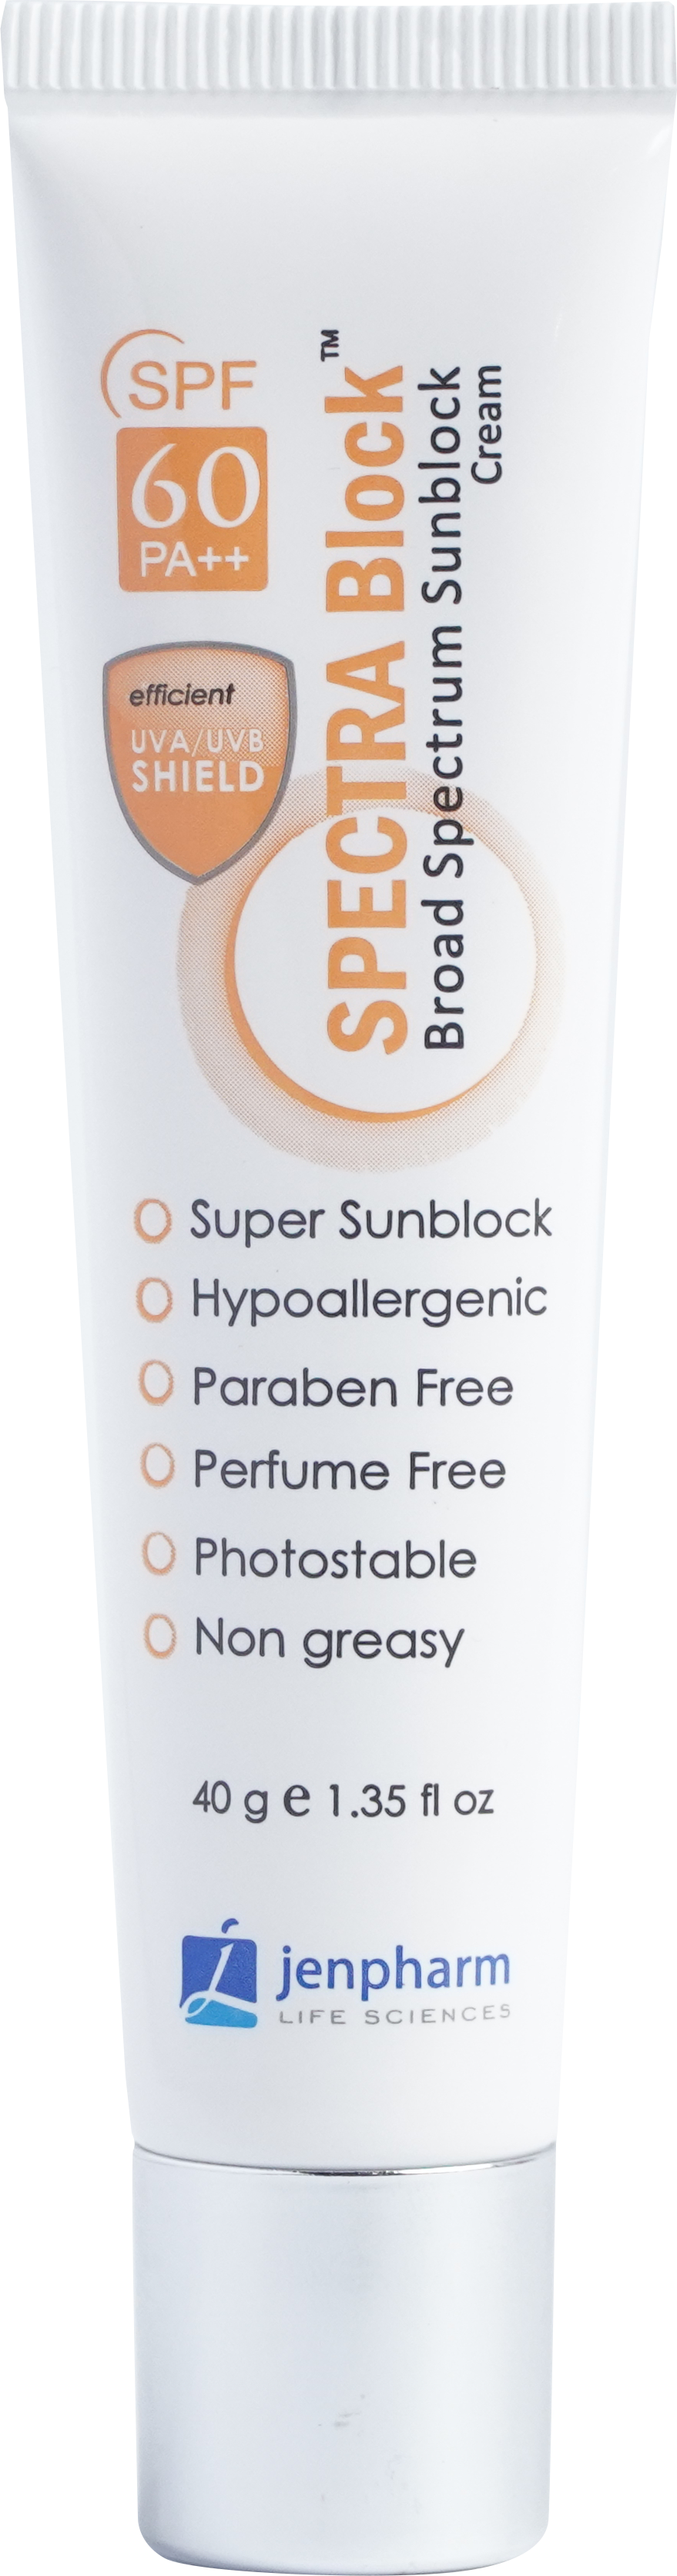 sunblock for sensitive skin